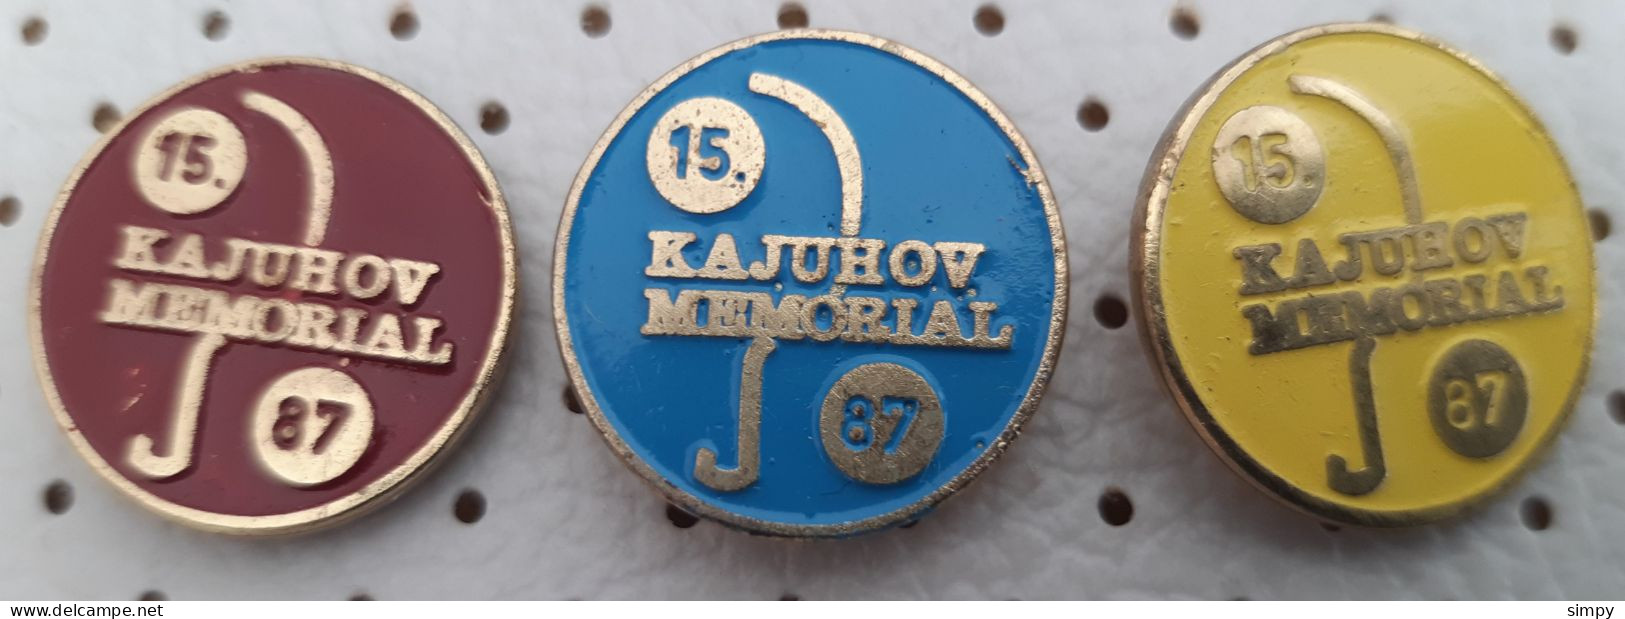 Table Tennis Tournament 15. Kajuhov Memorial  1987 Slovenia Pins Badge - Tenis De Mesa